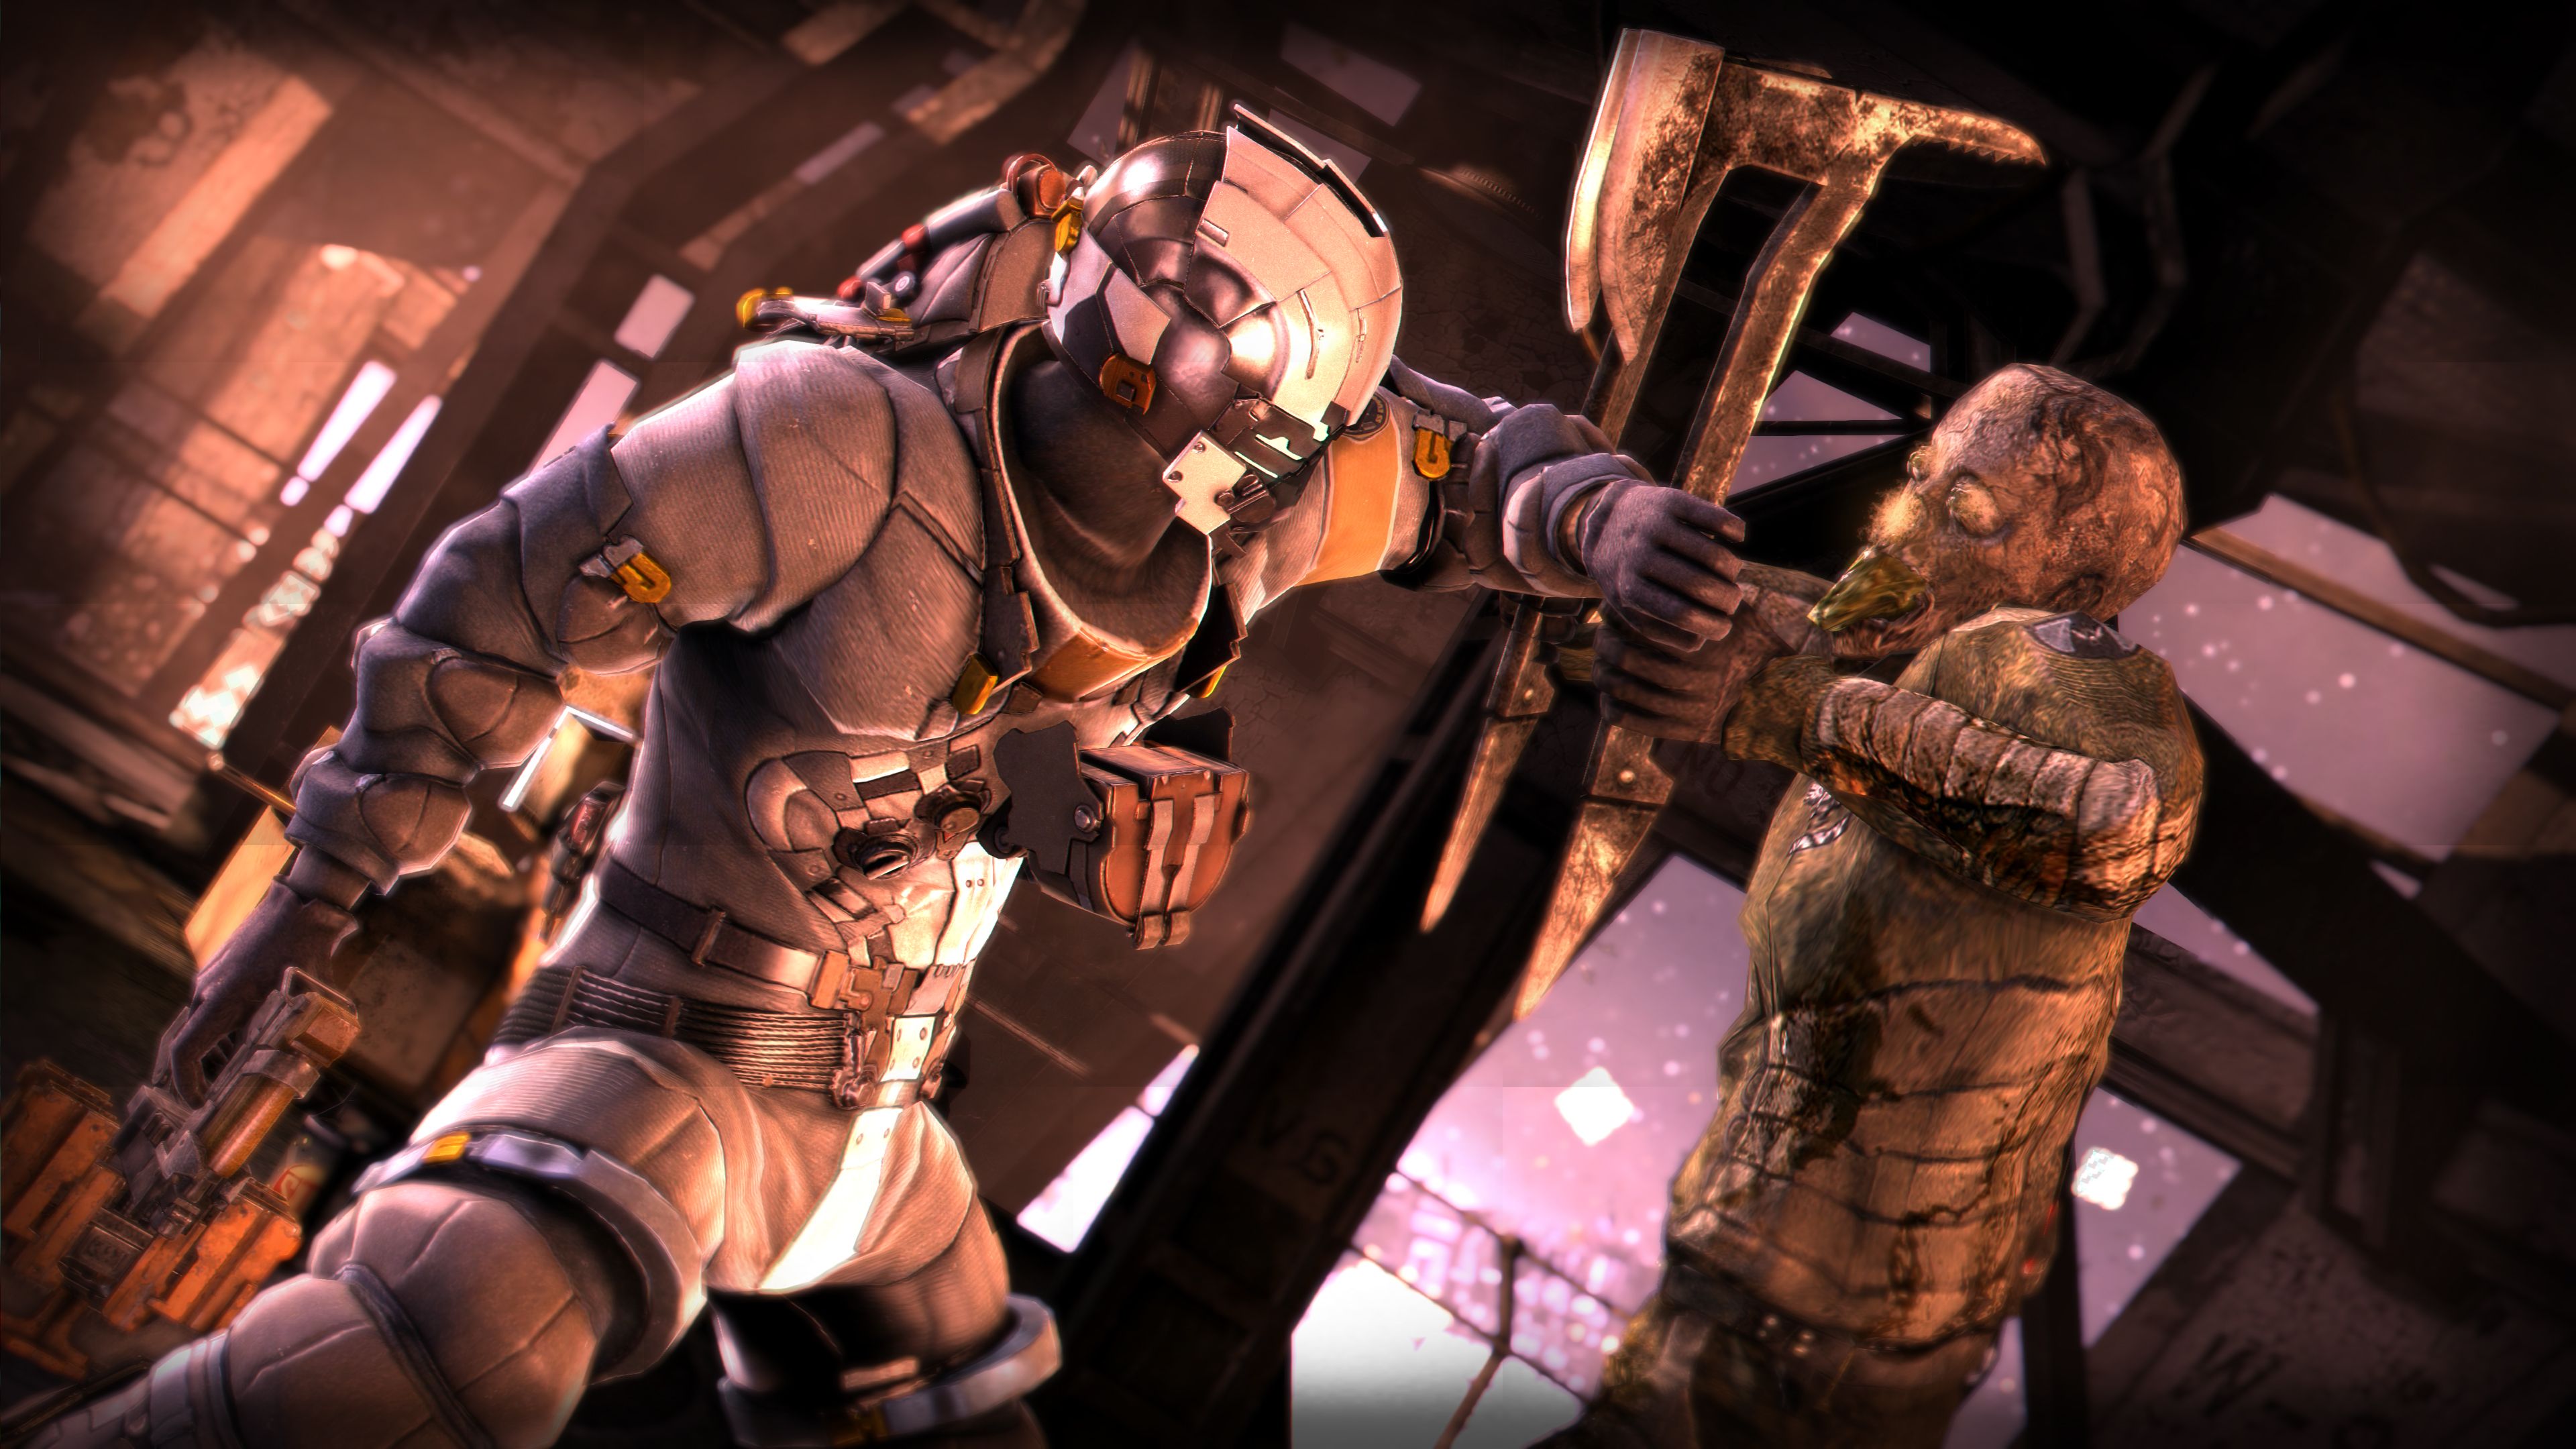 Dead Space 3 Screenshots - Image #11129